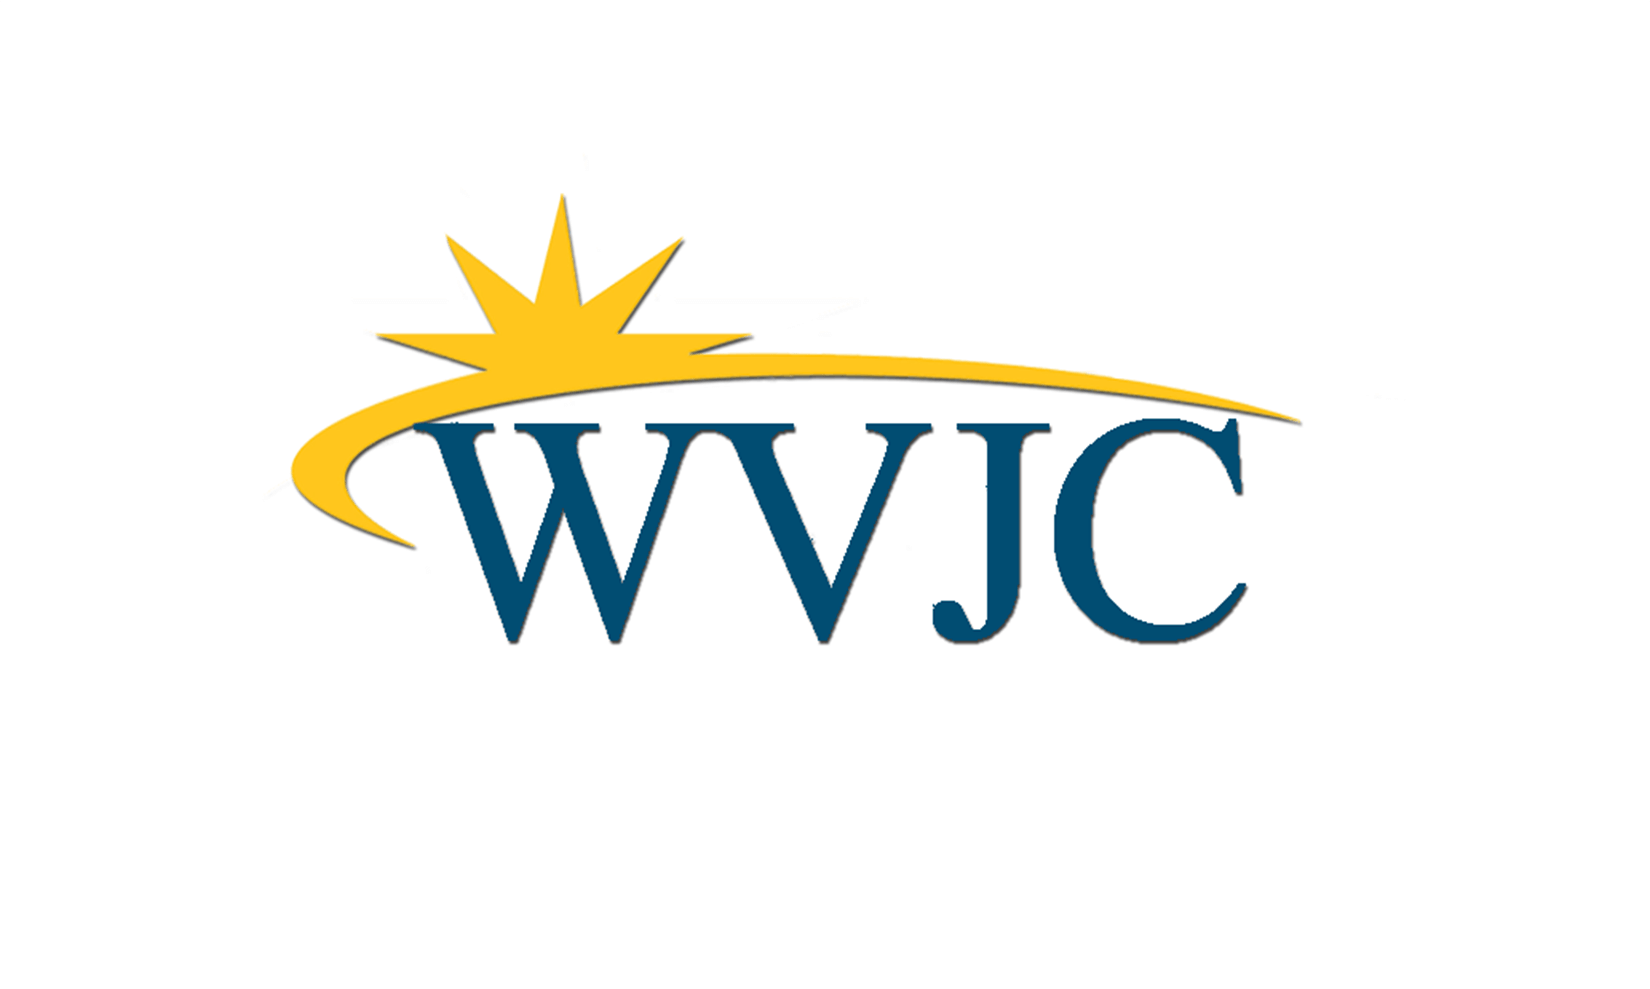 WVJC logo